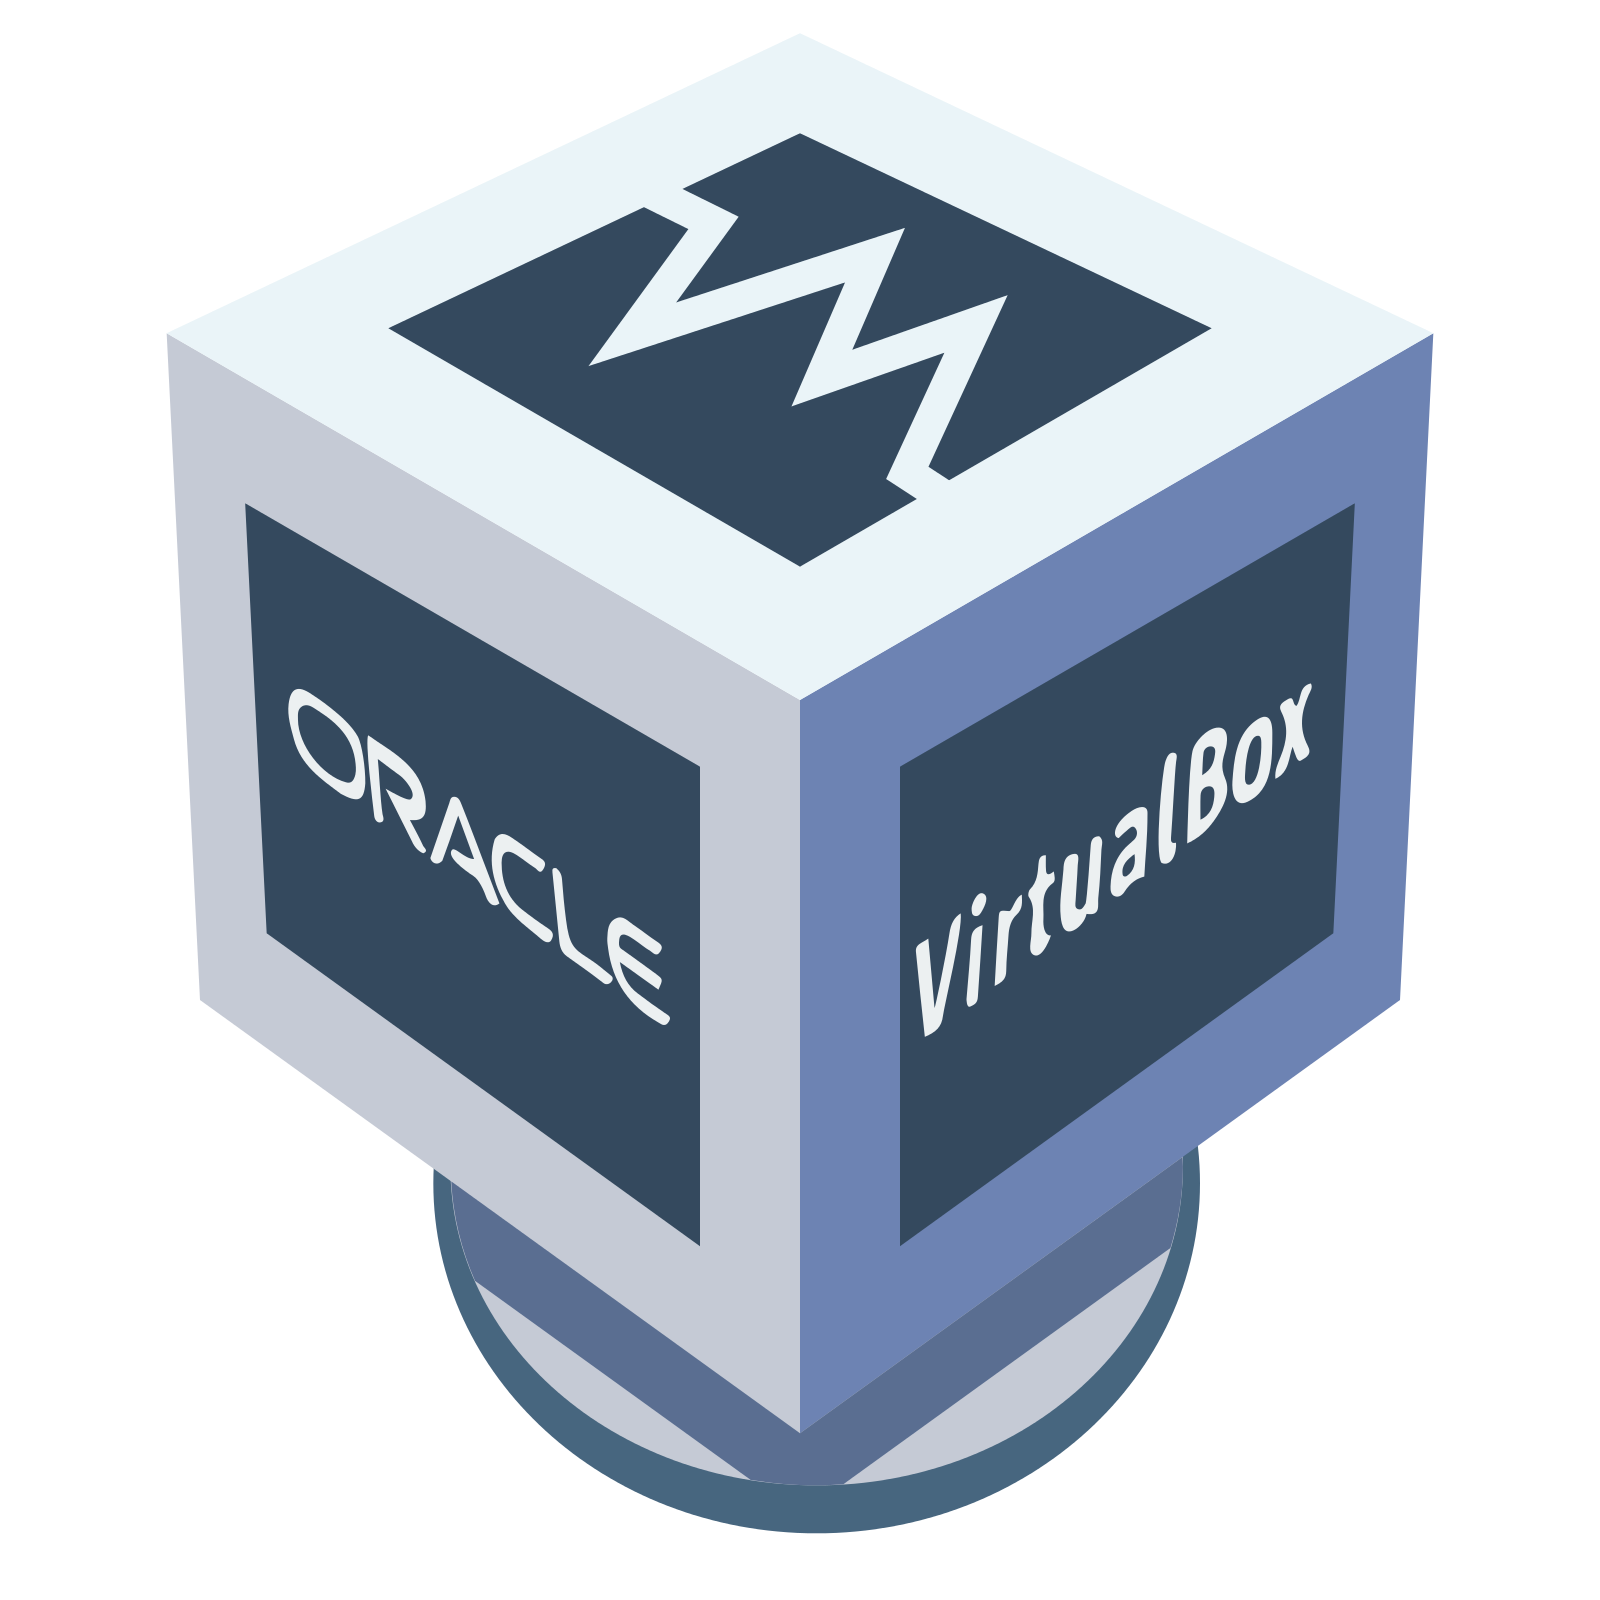 Virtual machine user. Виртуальная машина VIRTUALBOX. Значок виртуал бокс. Виртуальная машина Oracle VIRTUALBOX. Oracle VIRTUALBOX логотип.